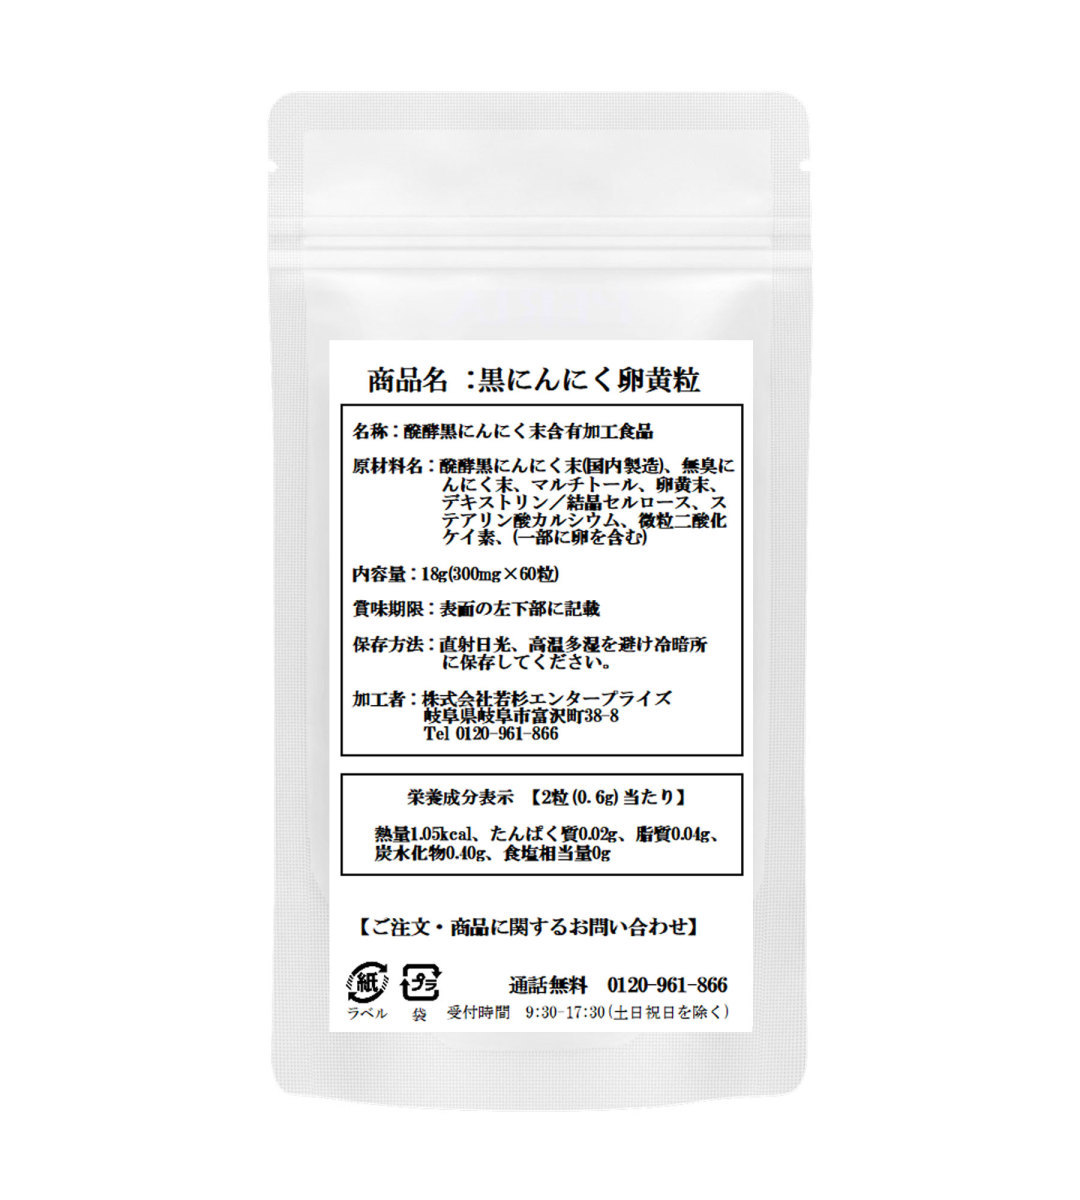  supplement .. black garlic egg yolk supplement 60 bead 50 sack set total 3000 bead set sale Aomori prefecture production Fukuchi white kind use pills . type 